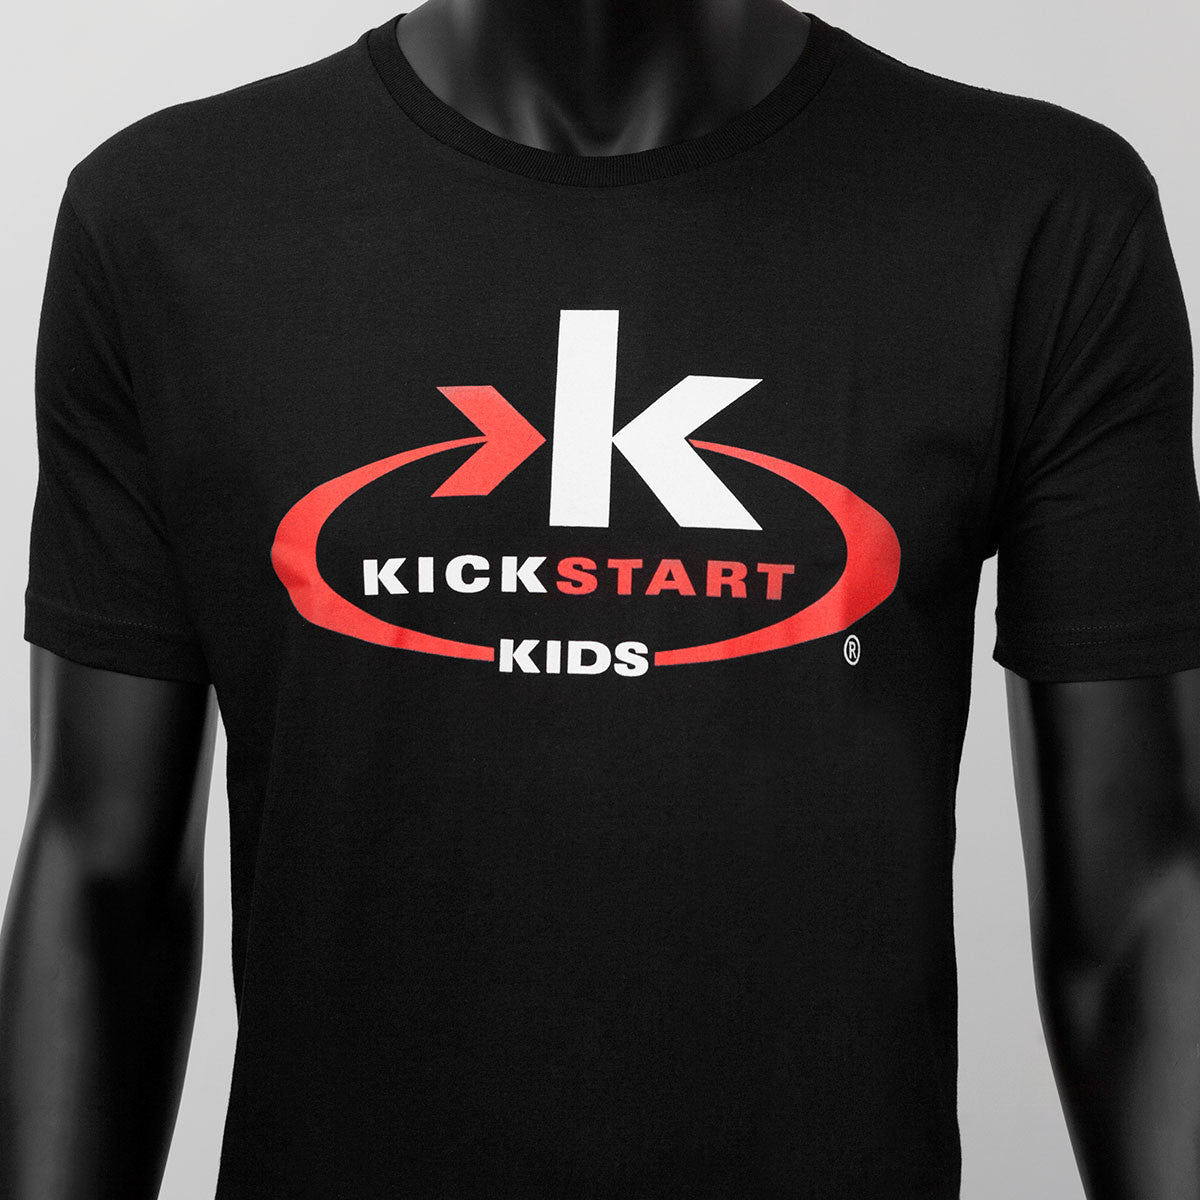 KSK Crew Perfect T-Shirt kickstartkids – KSK Logo Weight